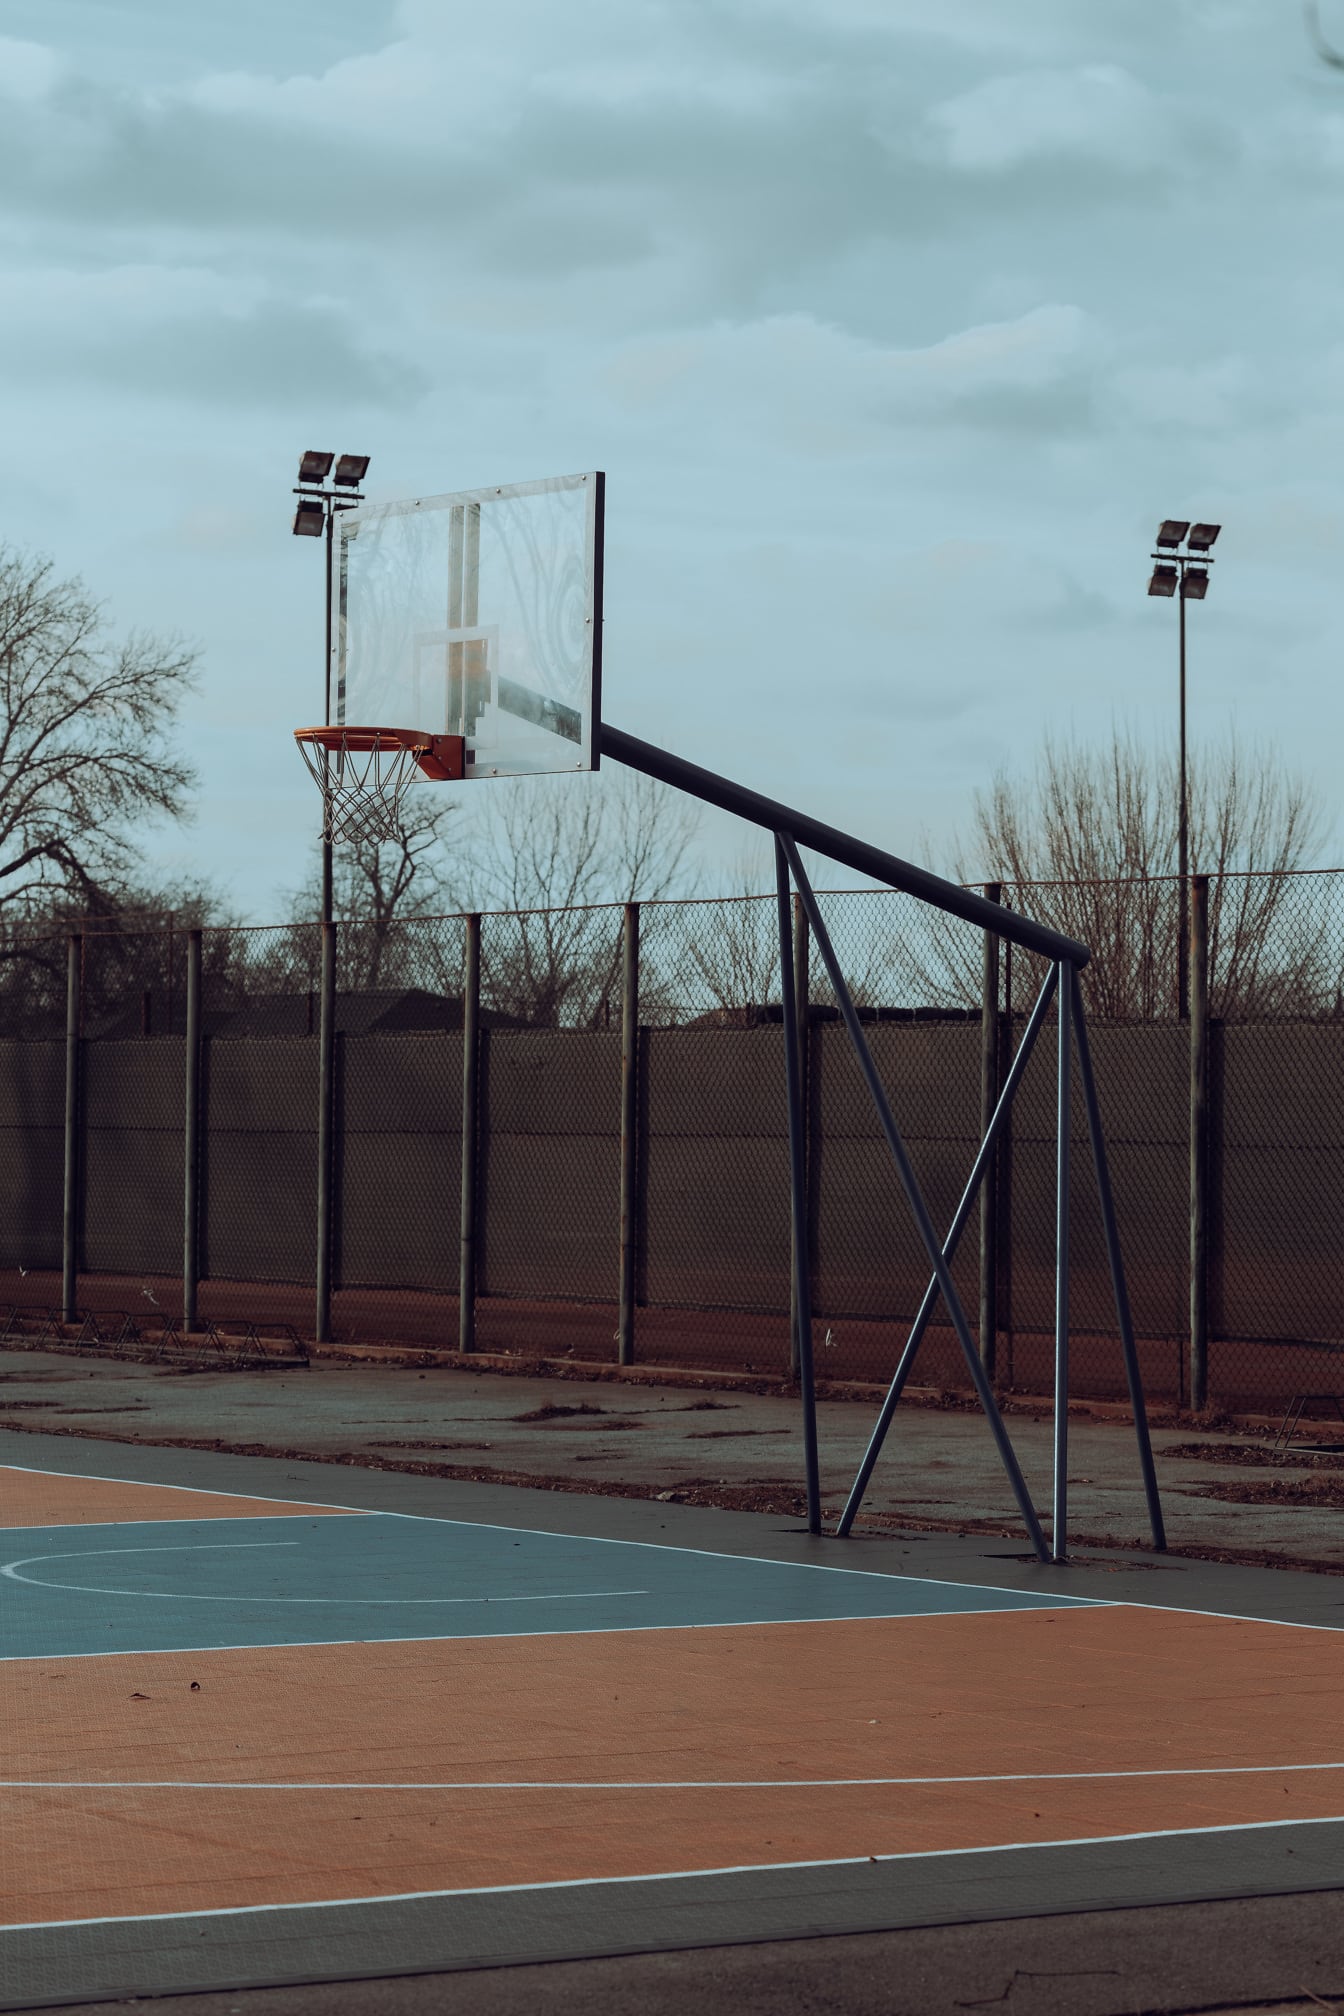 Lapangan basket kosong di daerah perkotaan